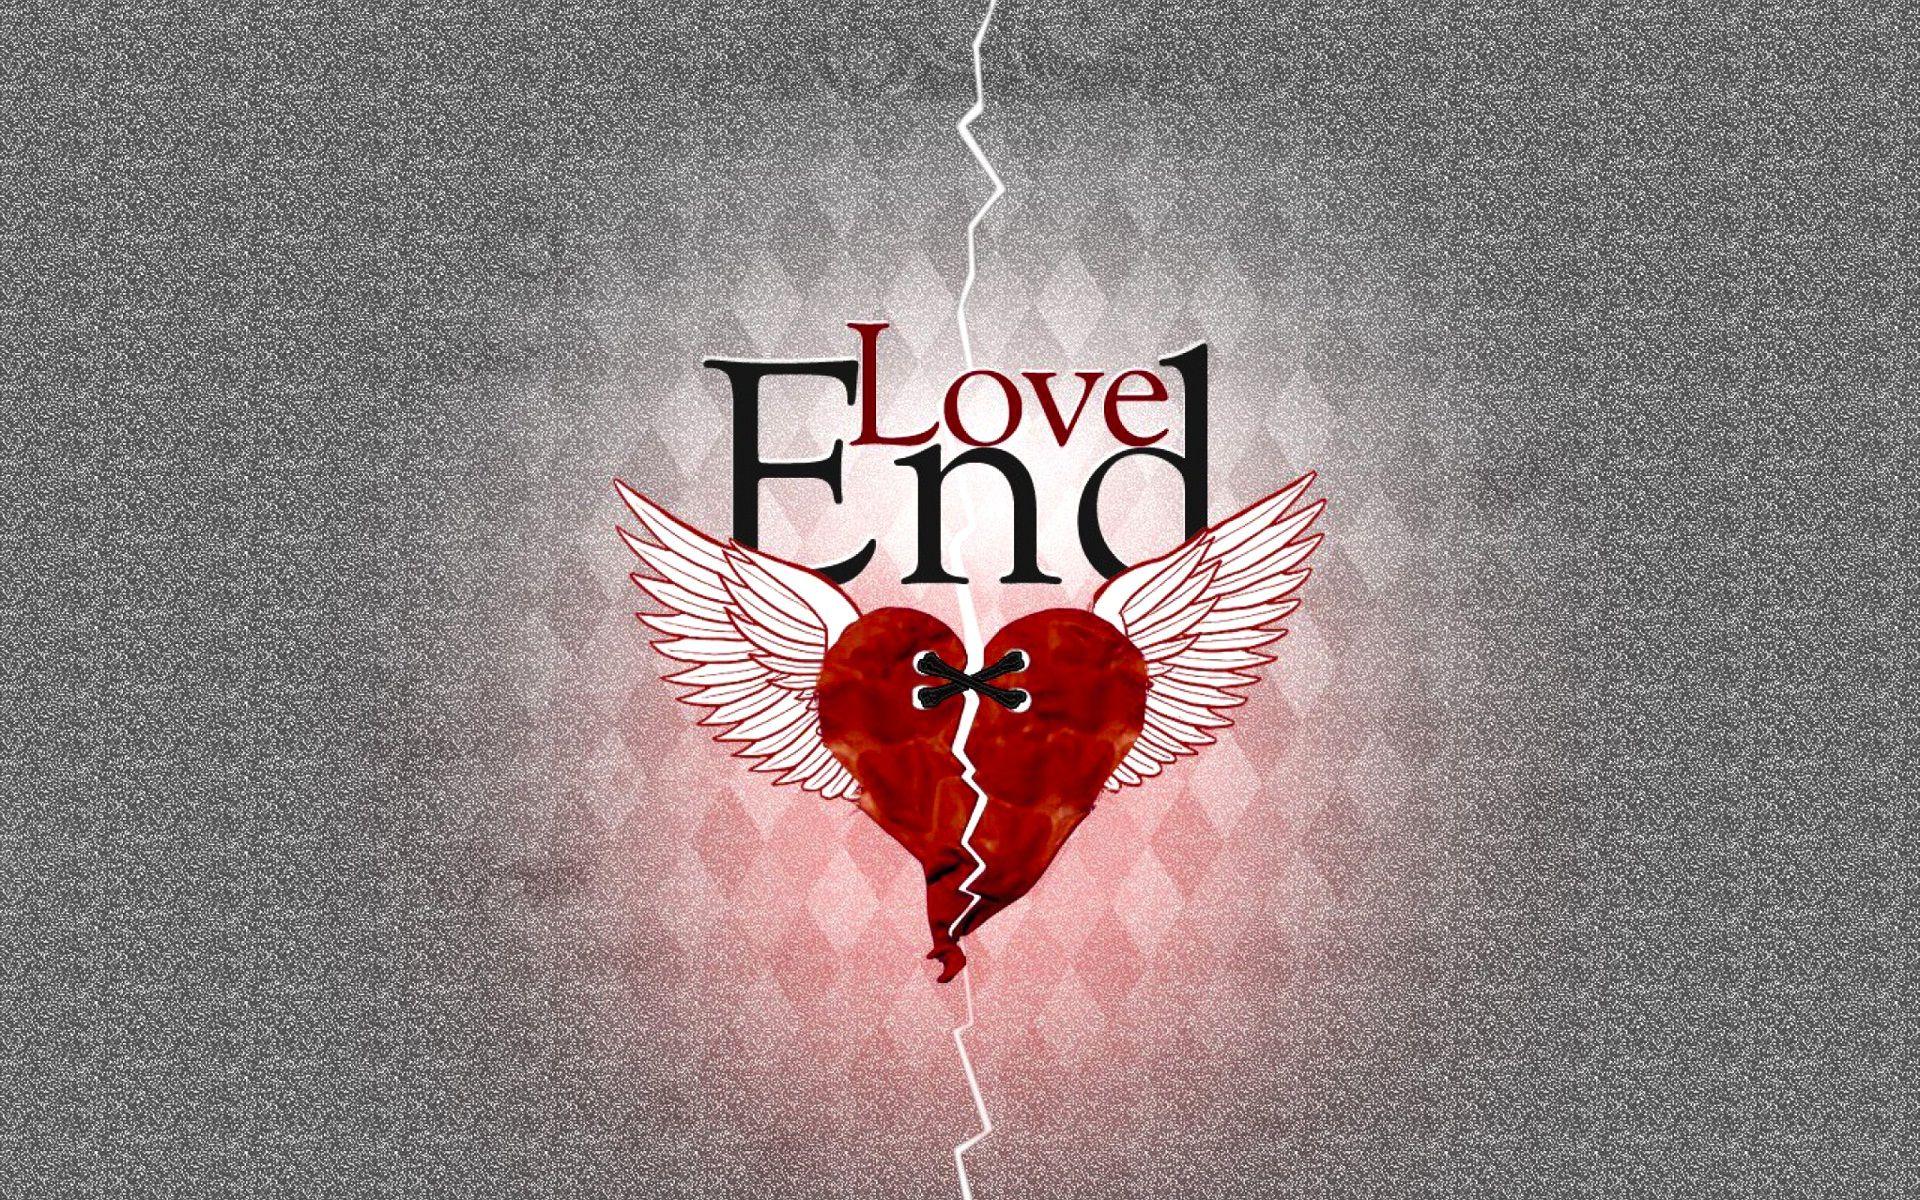 The end of love broken heart wallpaper HD wallpaperNew HD